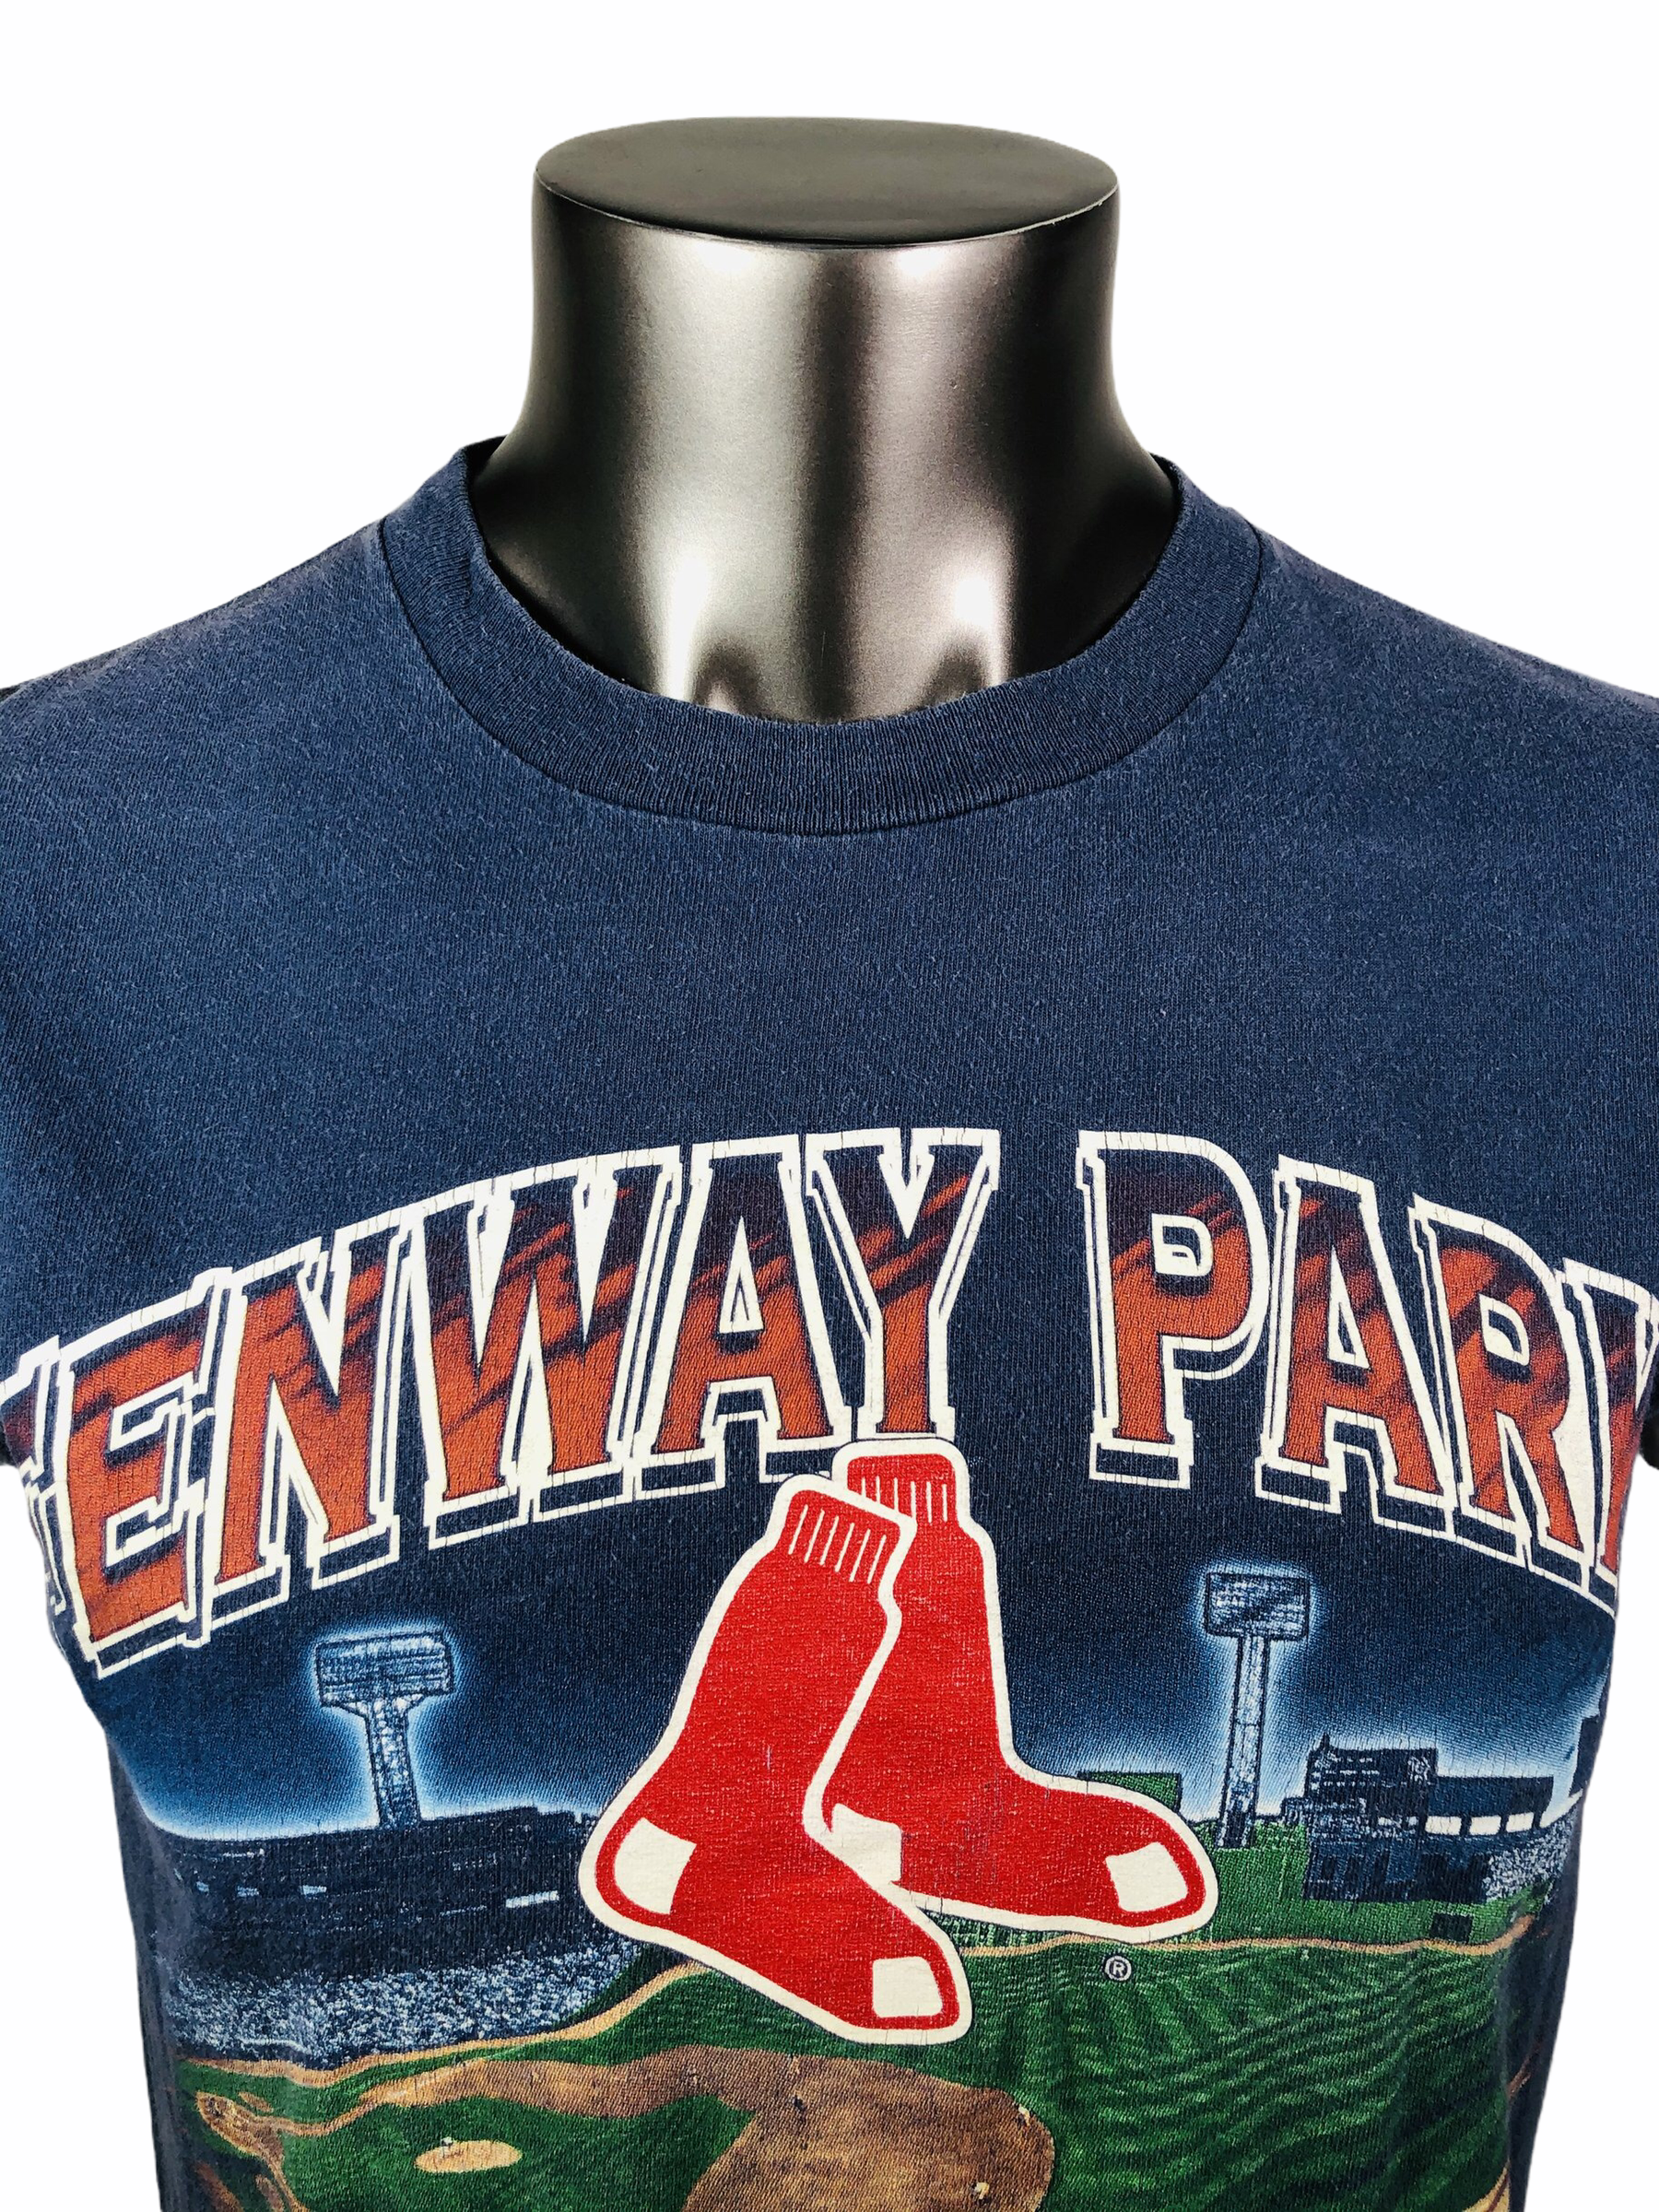 Retro Boston Baseball MLB Red Sox 1901 City 90s Style Shirt - Ink